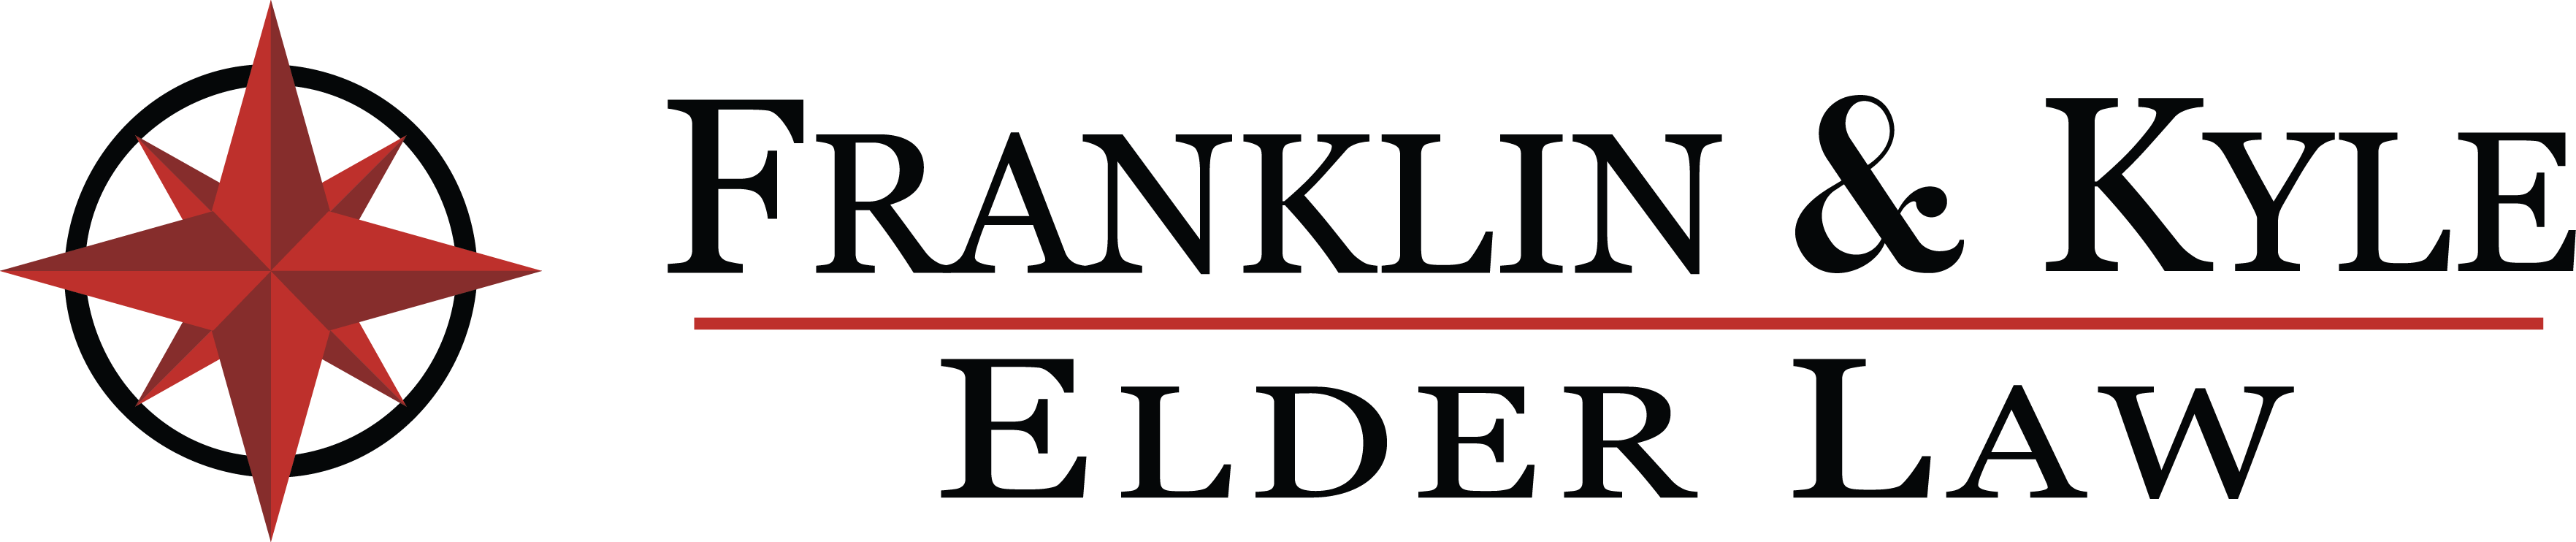 Franklin & Kyle Elder Law, LLC